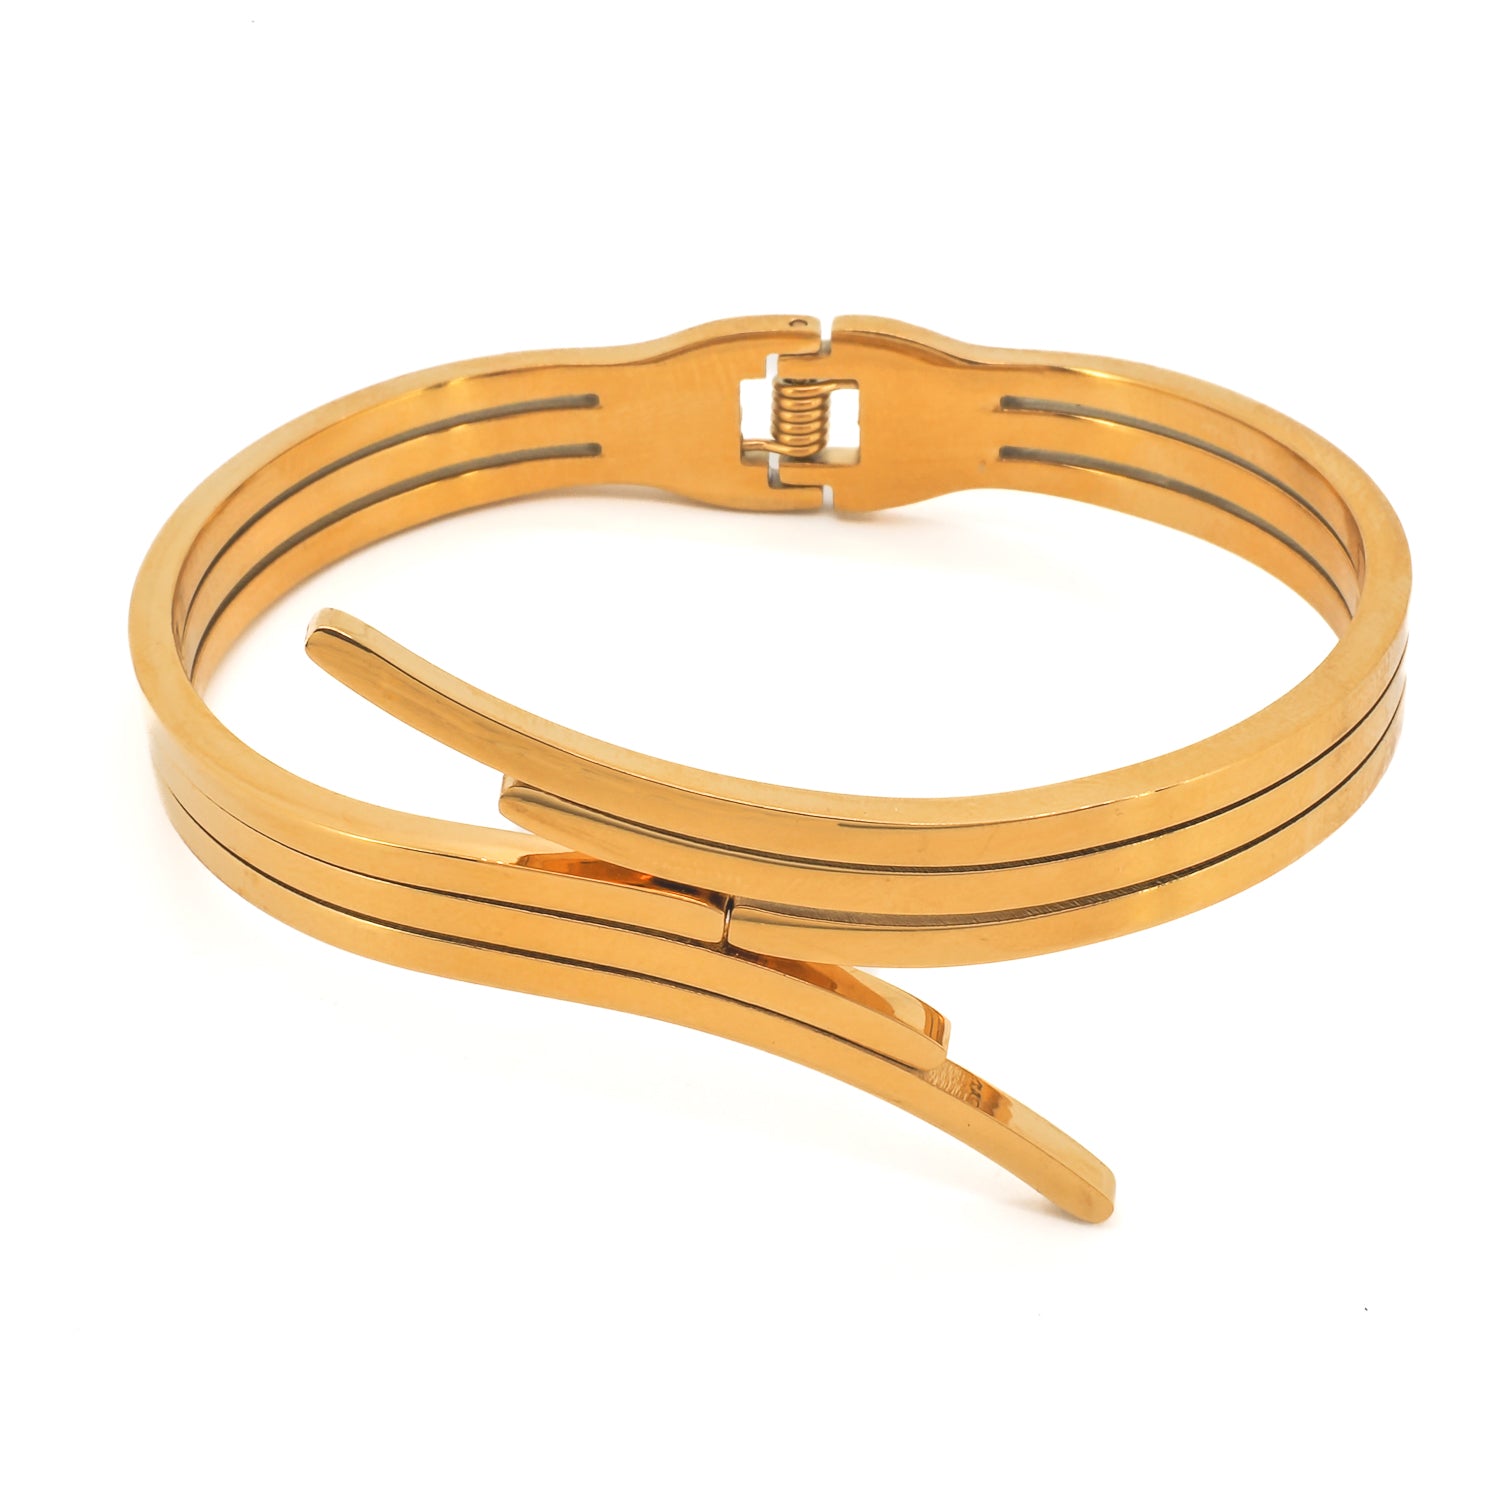 Gold Bangle Bracelet - A close-up image showcasing the sleek and polished design of the handmade bracelet, made from high-quality 18K gold plated steel. The bracelet exudes sophistication and timeless elegance.